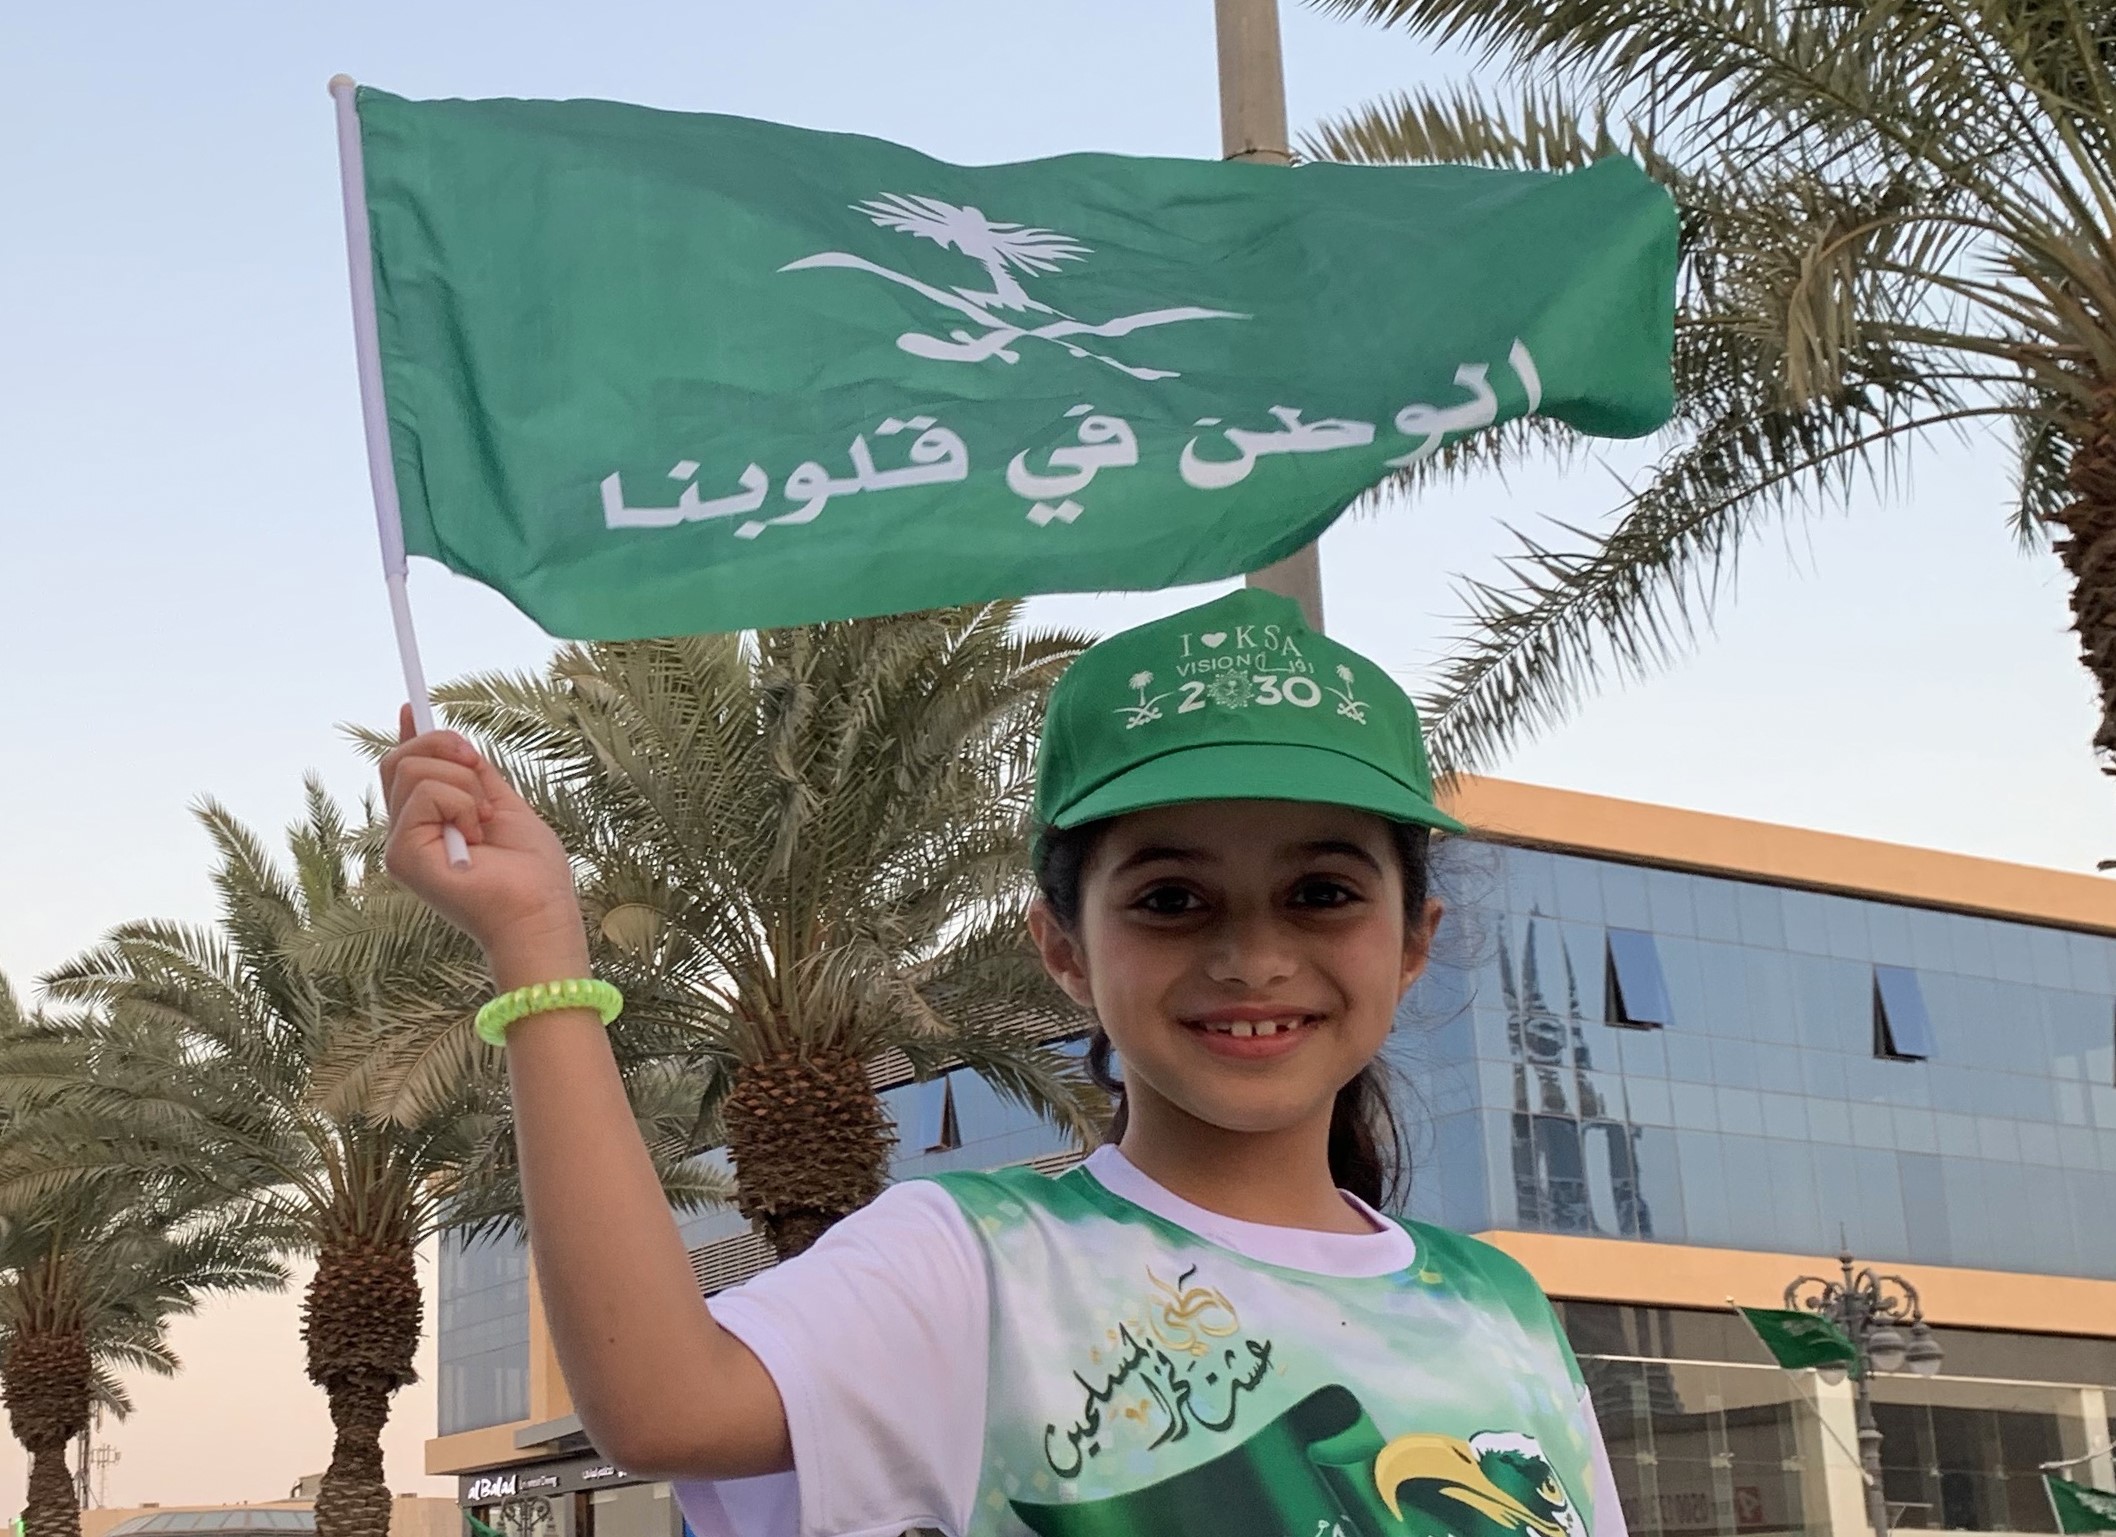 A girl waves a flag during celebrations in Riyadh marking Saudi Arabi's National Day on 23 September (AFP)